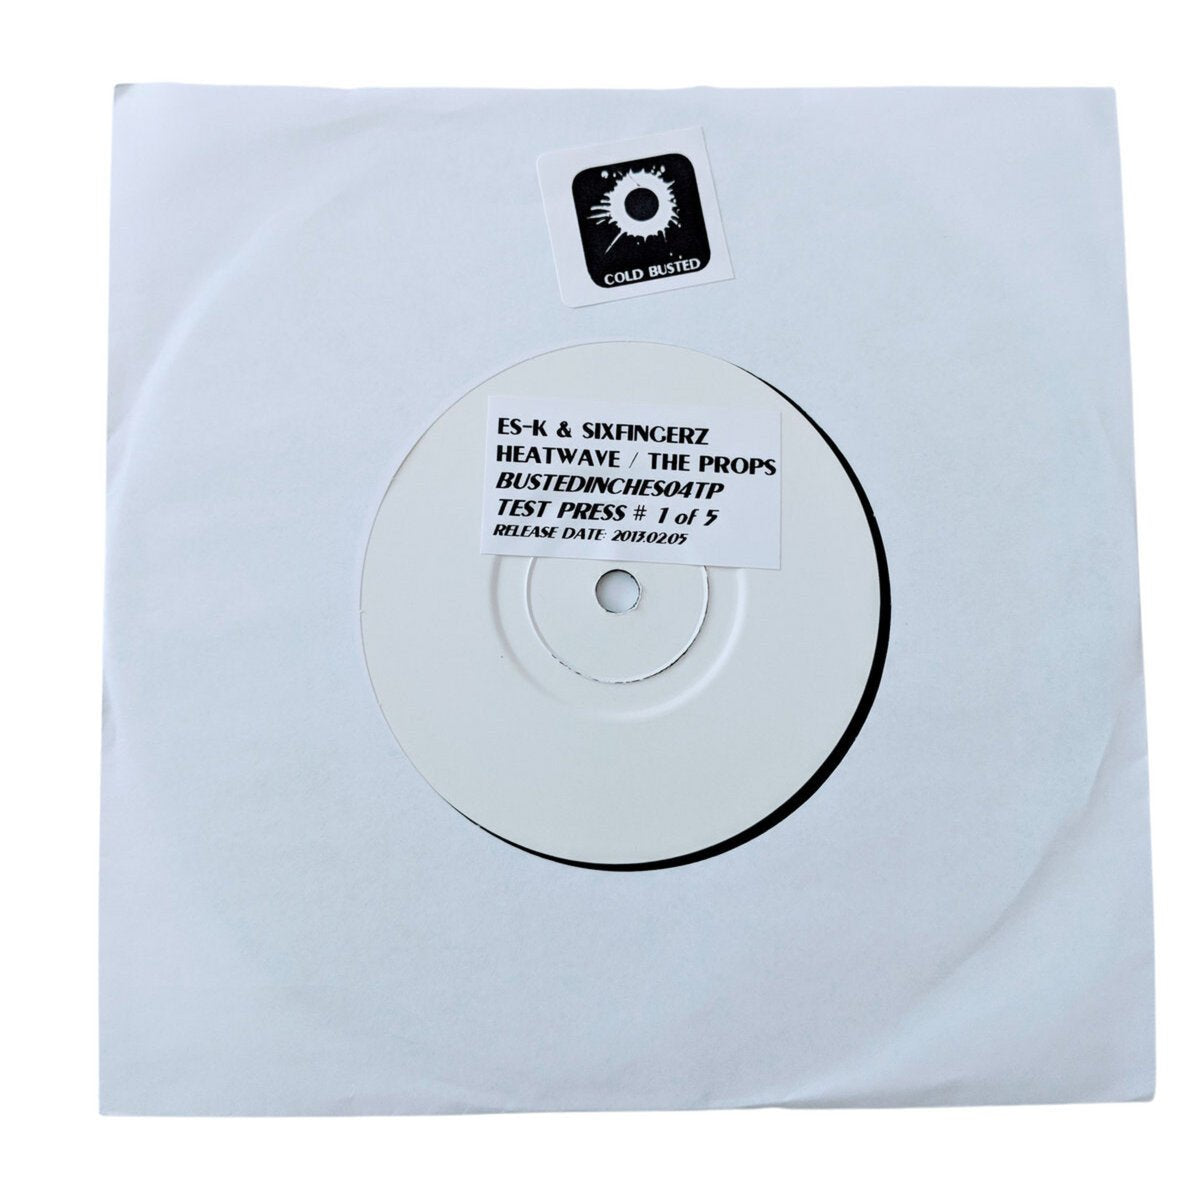 Es-K & Sixfingerz - Heatwave / The Props - Limited Edition 7 Inch Vinyl Test Pressing - Cold Busted